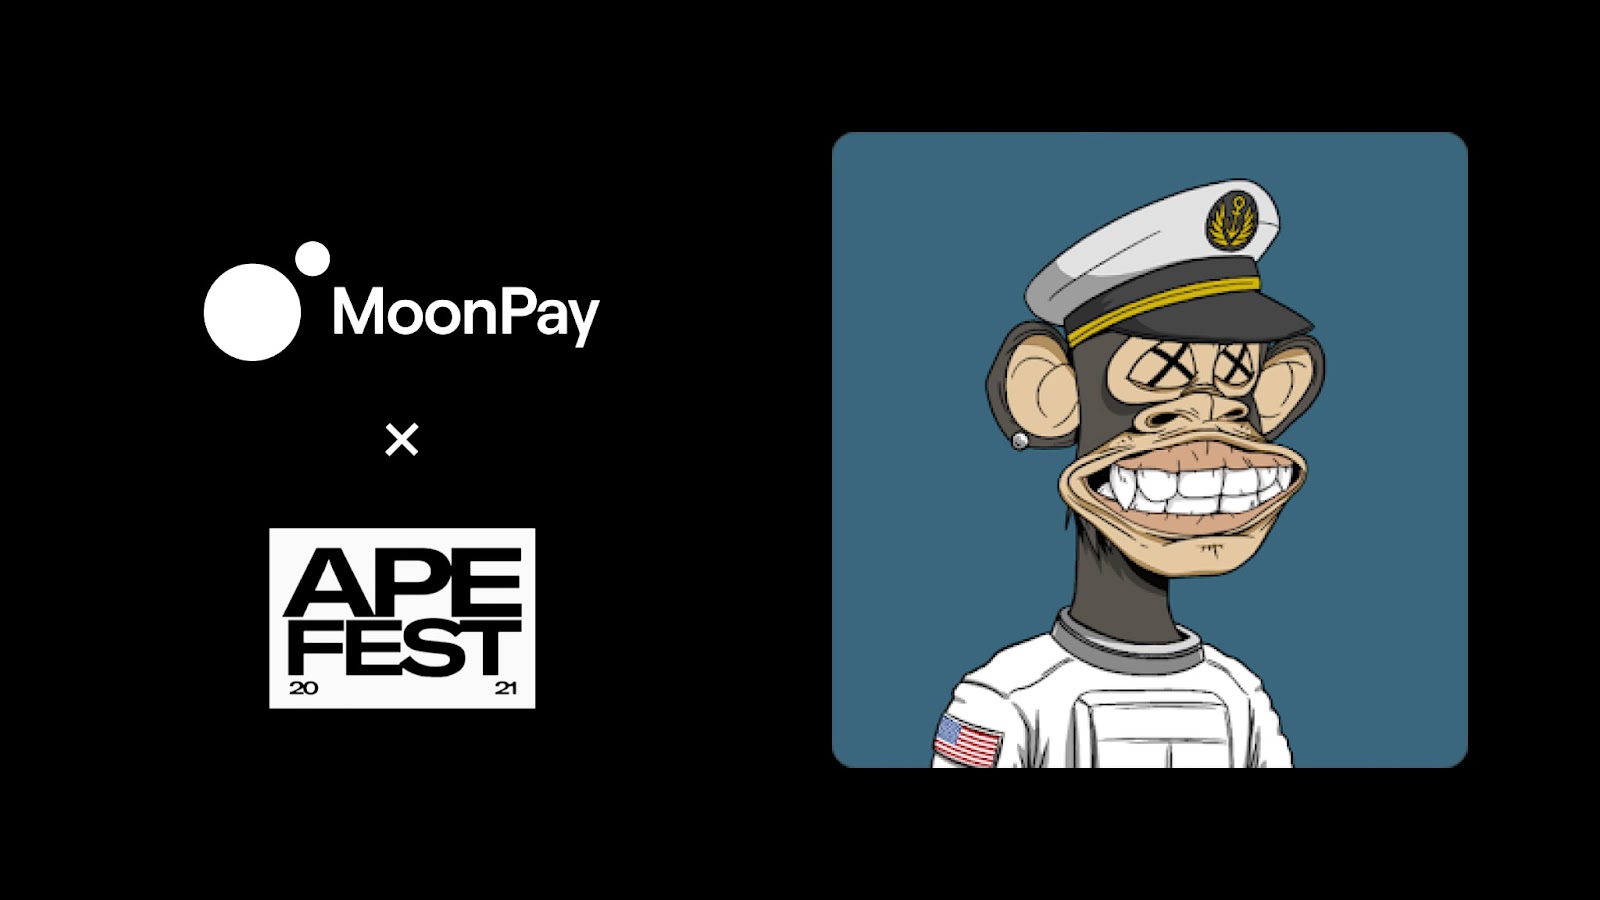 A photo of MoonPay and Bored Ape Yacht Club’s ApeFest logos.